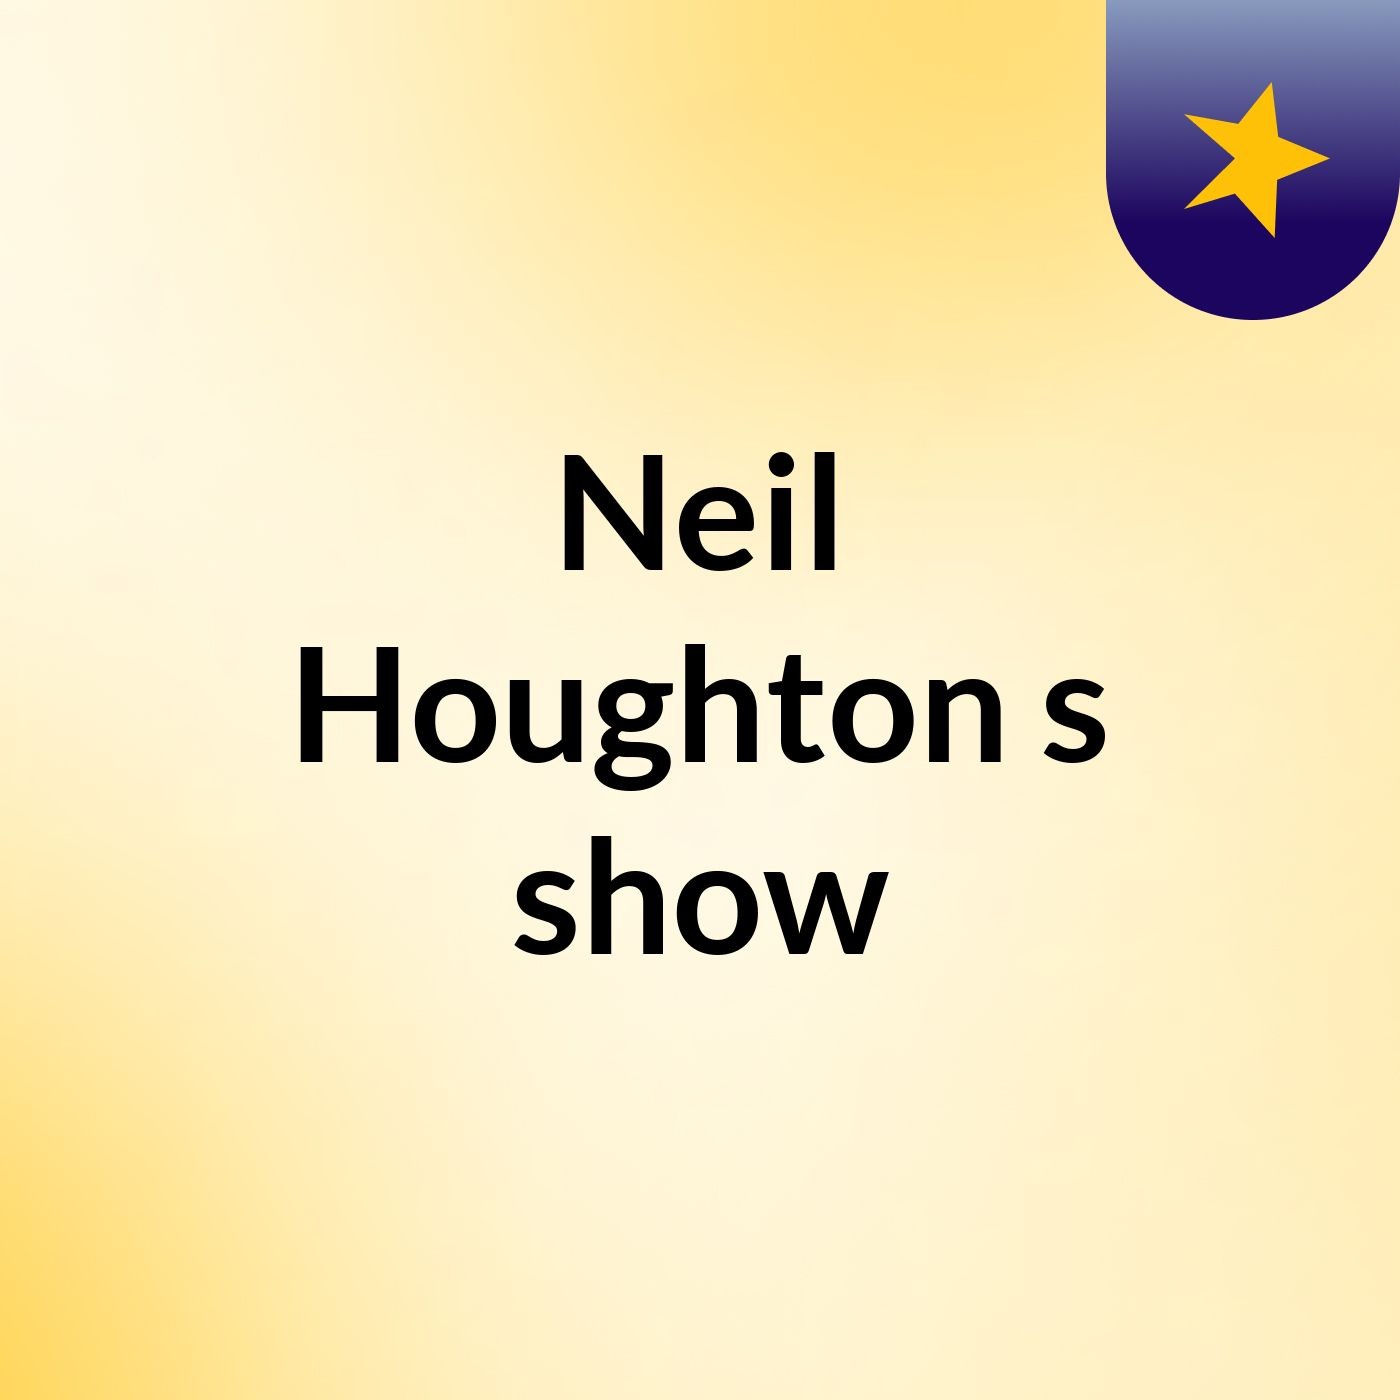 Neil Houghton's show